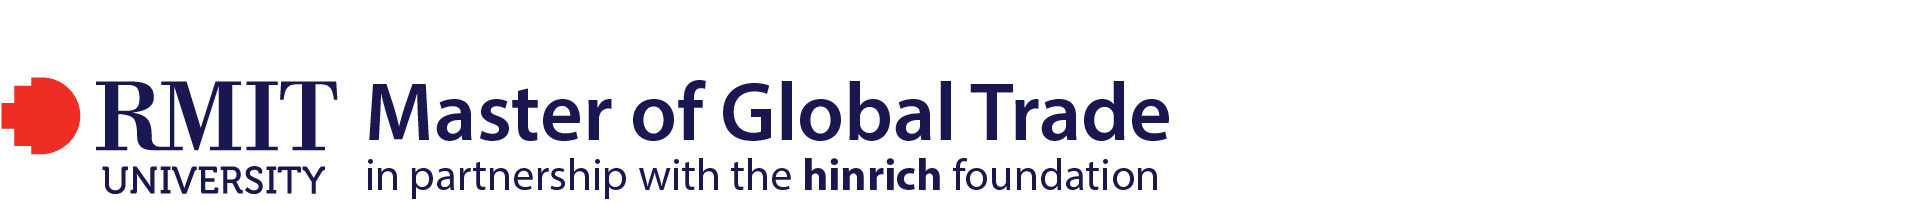 Master of Global Trade partnership logo (website)